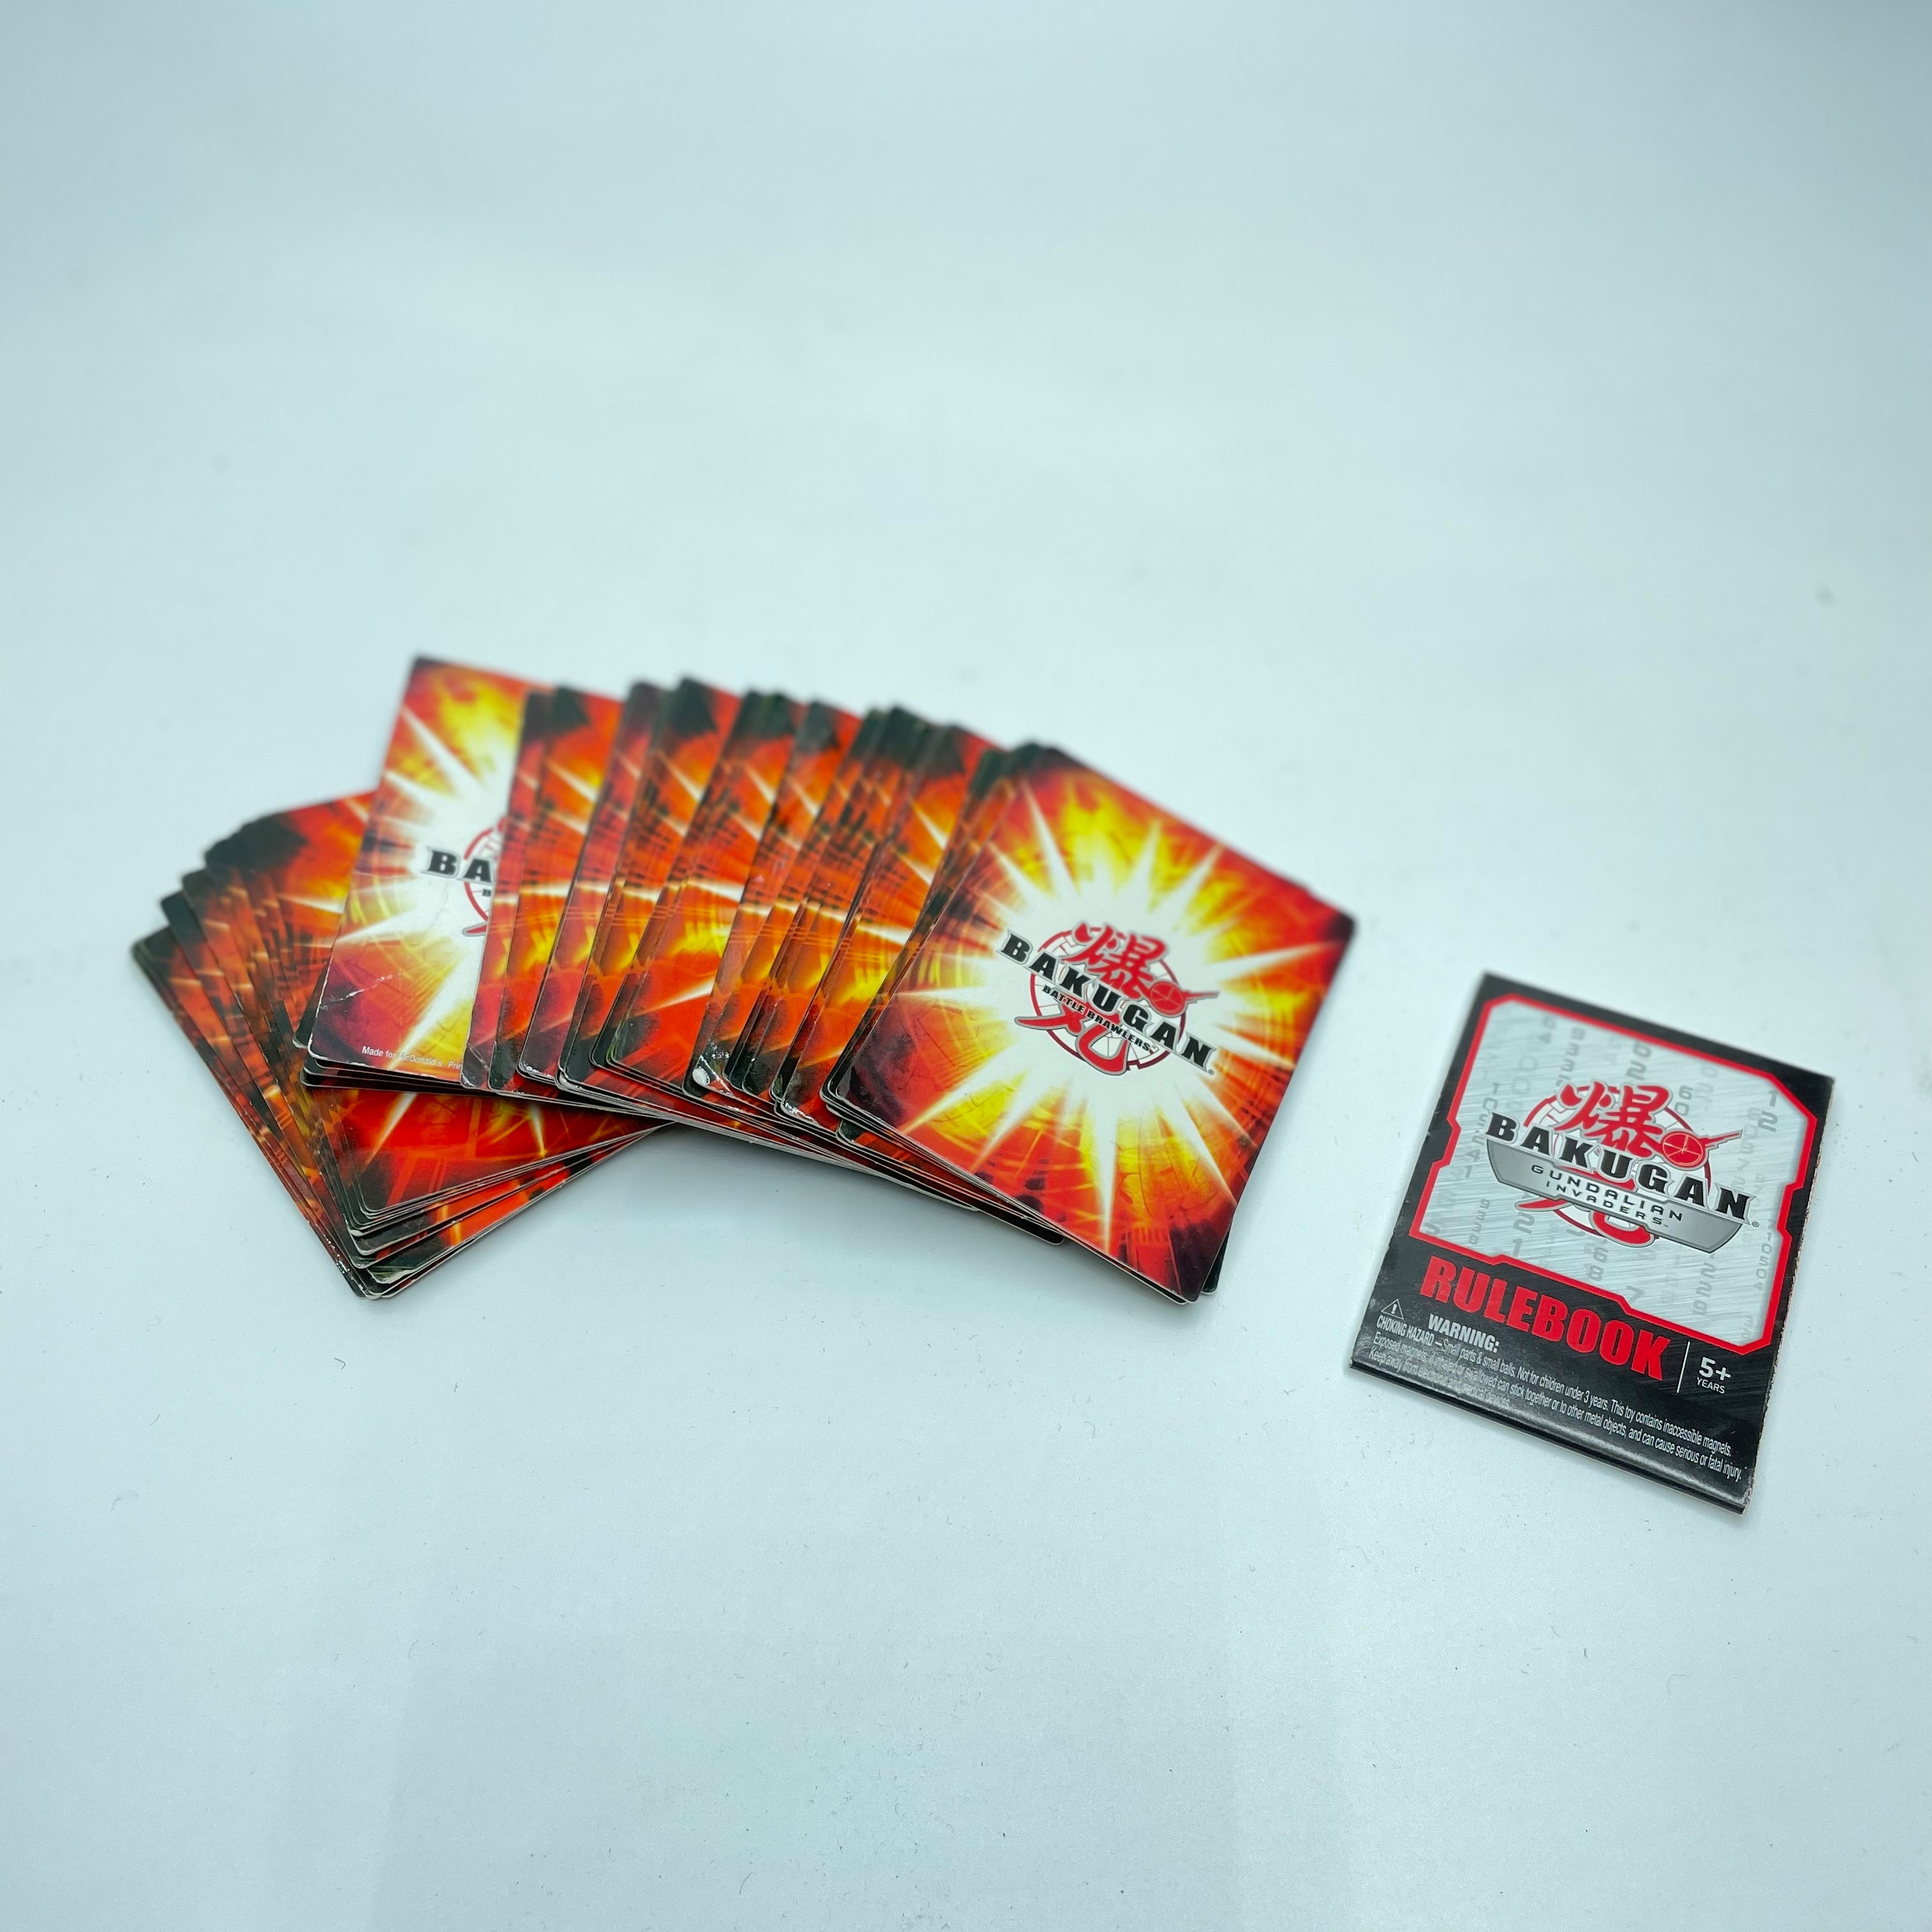 Set of 53 Bakugan Battle Cards